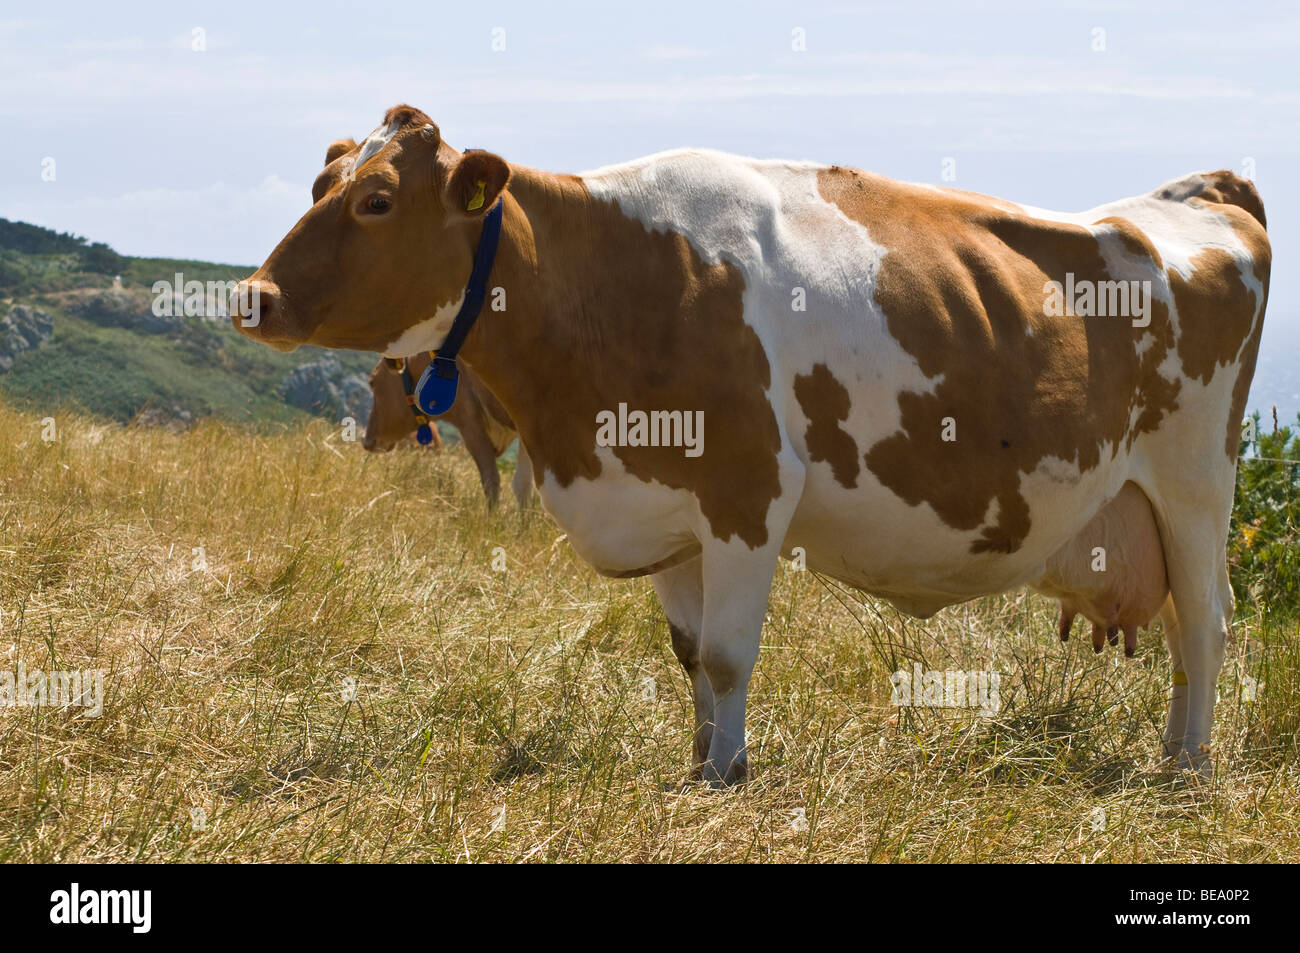 dh Guernsey mucca DI GUERNSEY marrone e bianca mucca di Guernsey pedigree in piedi profilo caseario bestiame latte mucche bovini uk Foto Stock